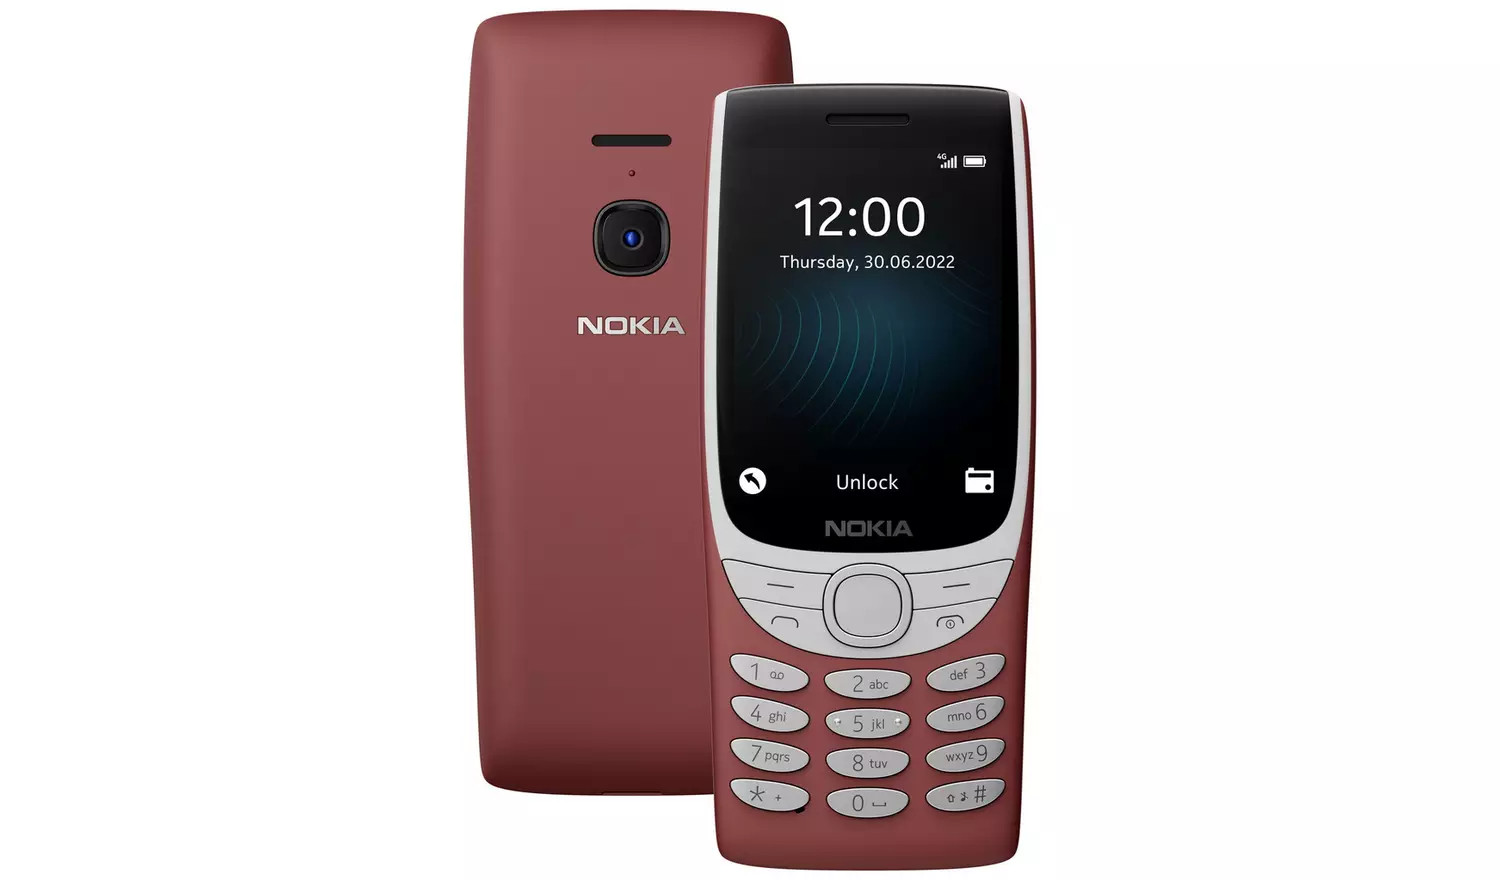 Nokia 8210 4G Dual Sim Mobile Phone Red